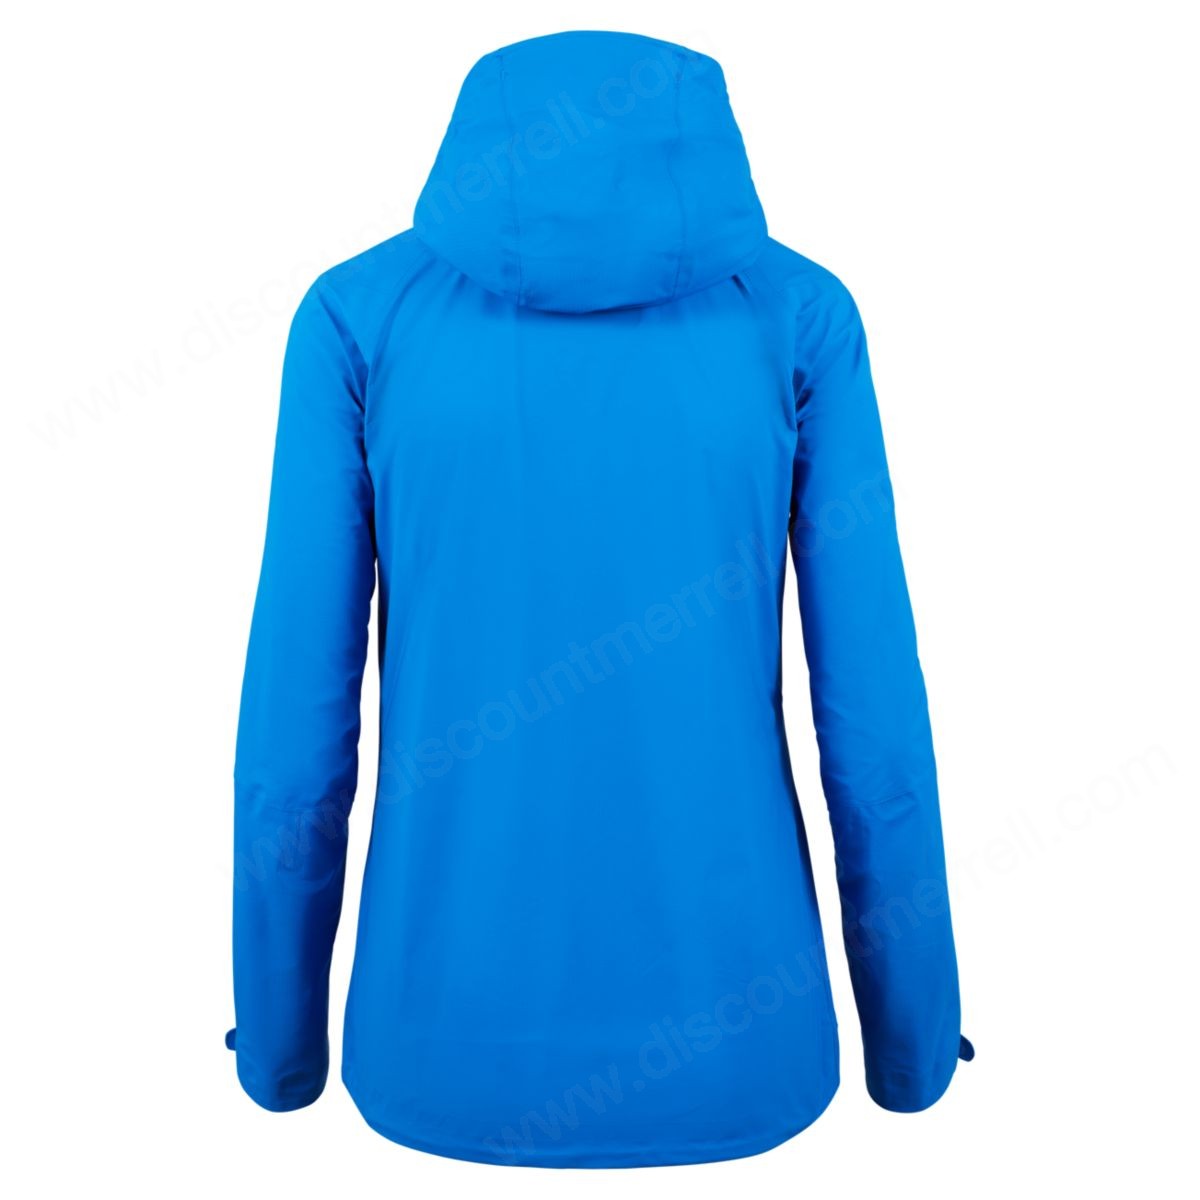 Merrell Womens's Shield Waterproof Packable Hardshell Jacket Princess Blue - -1